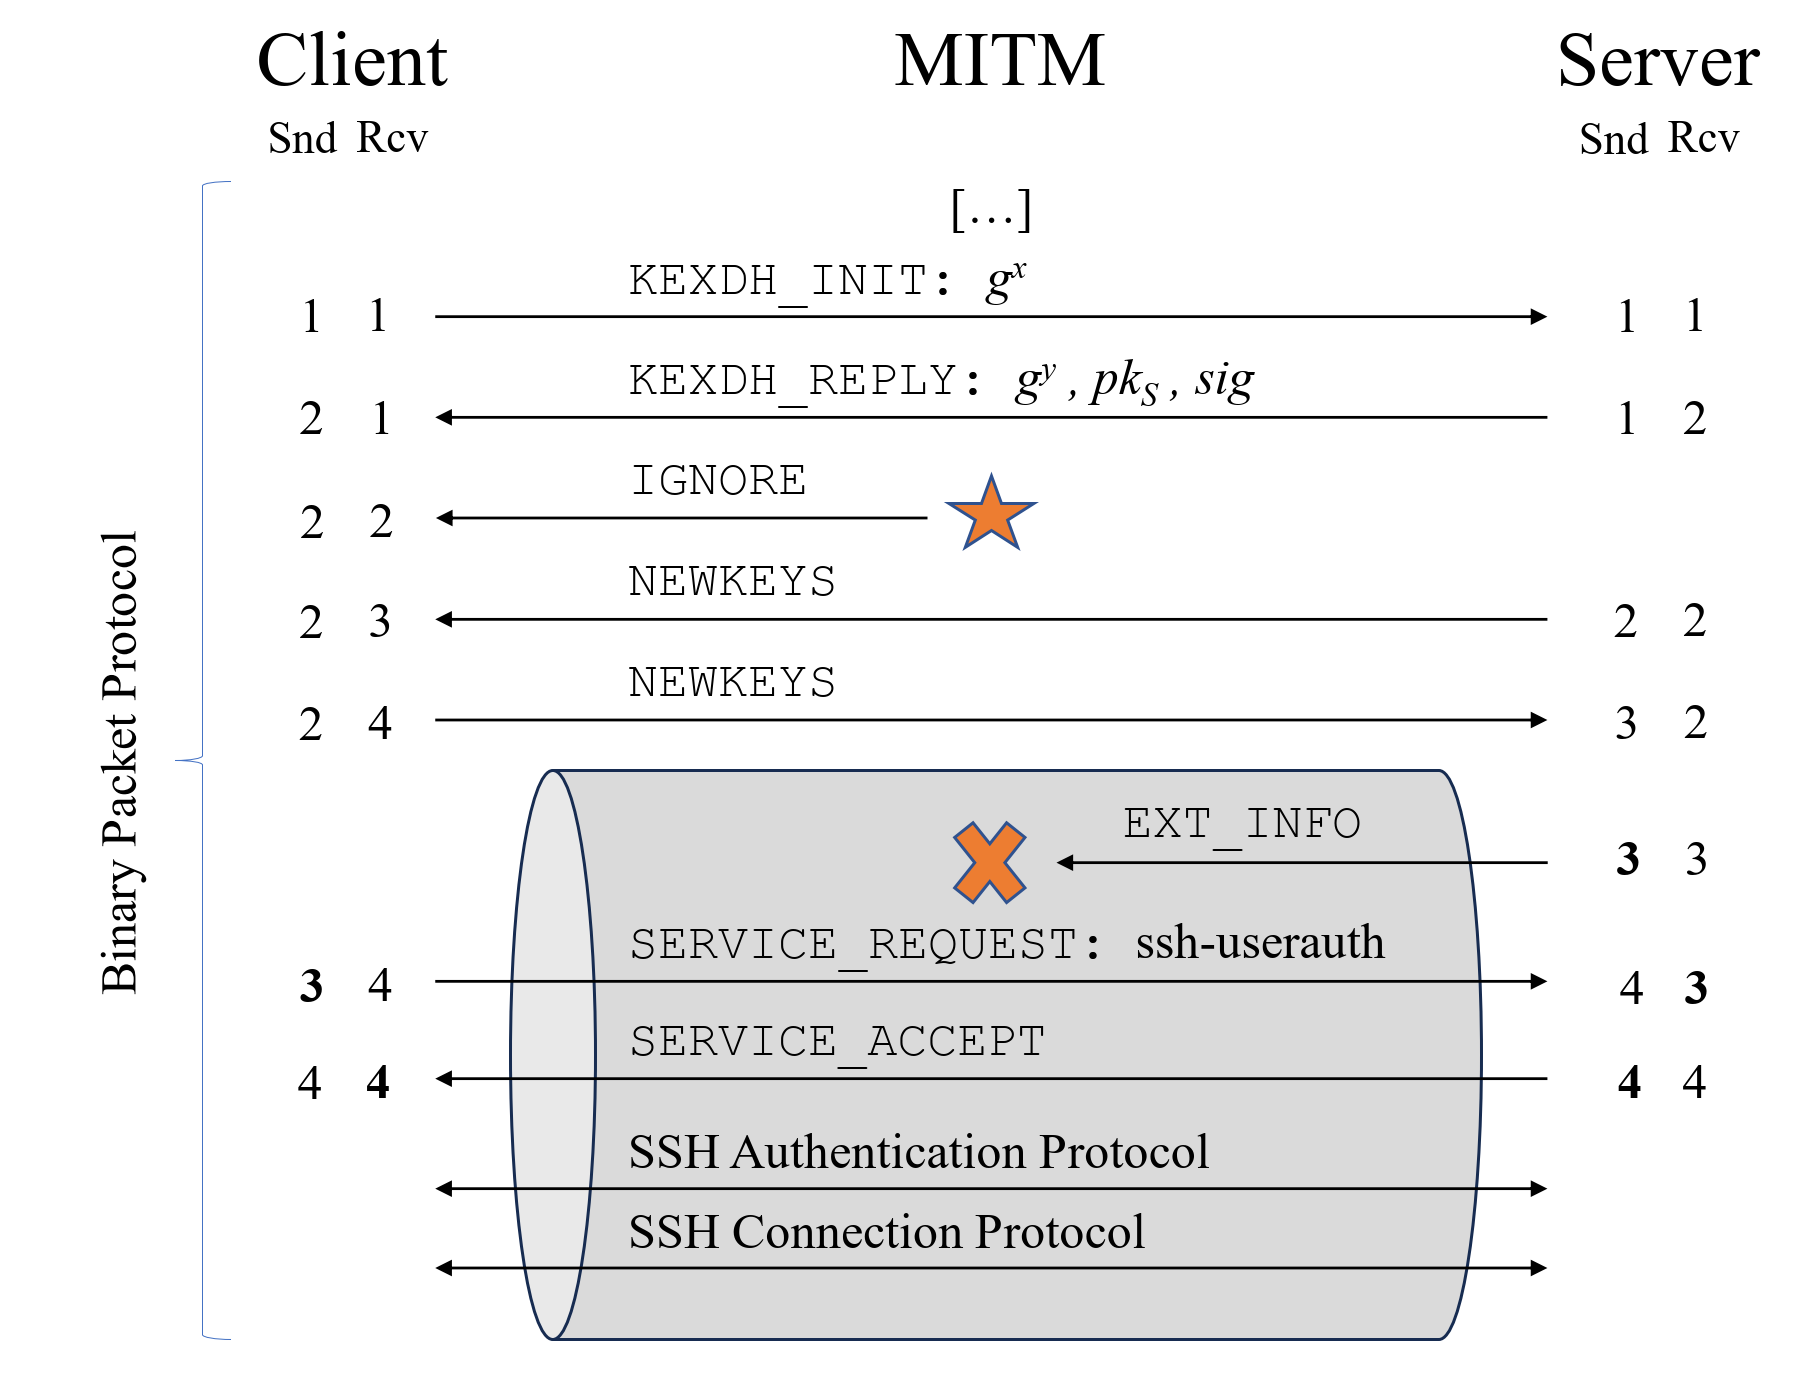 Terrapin attack allows to downgrade SSH protocol security